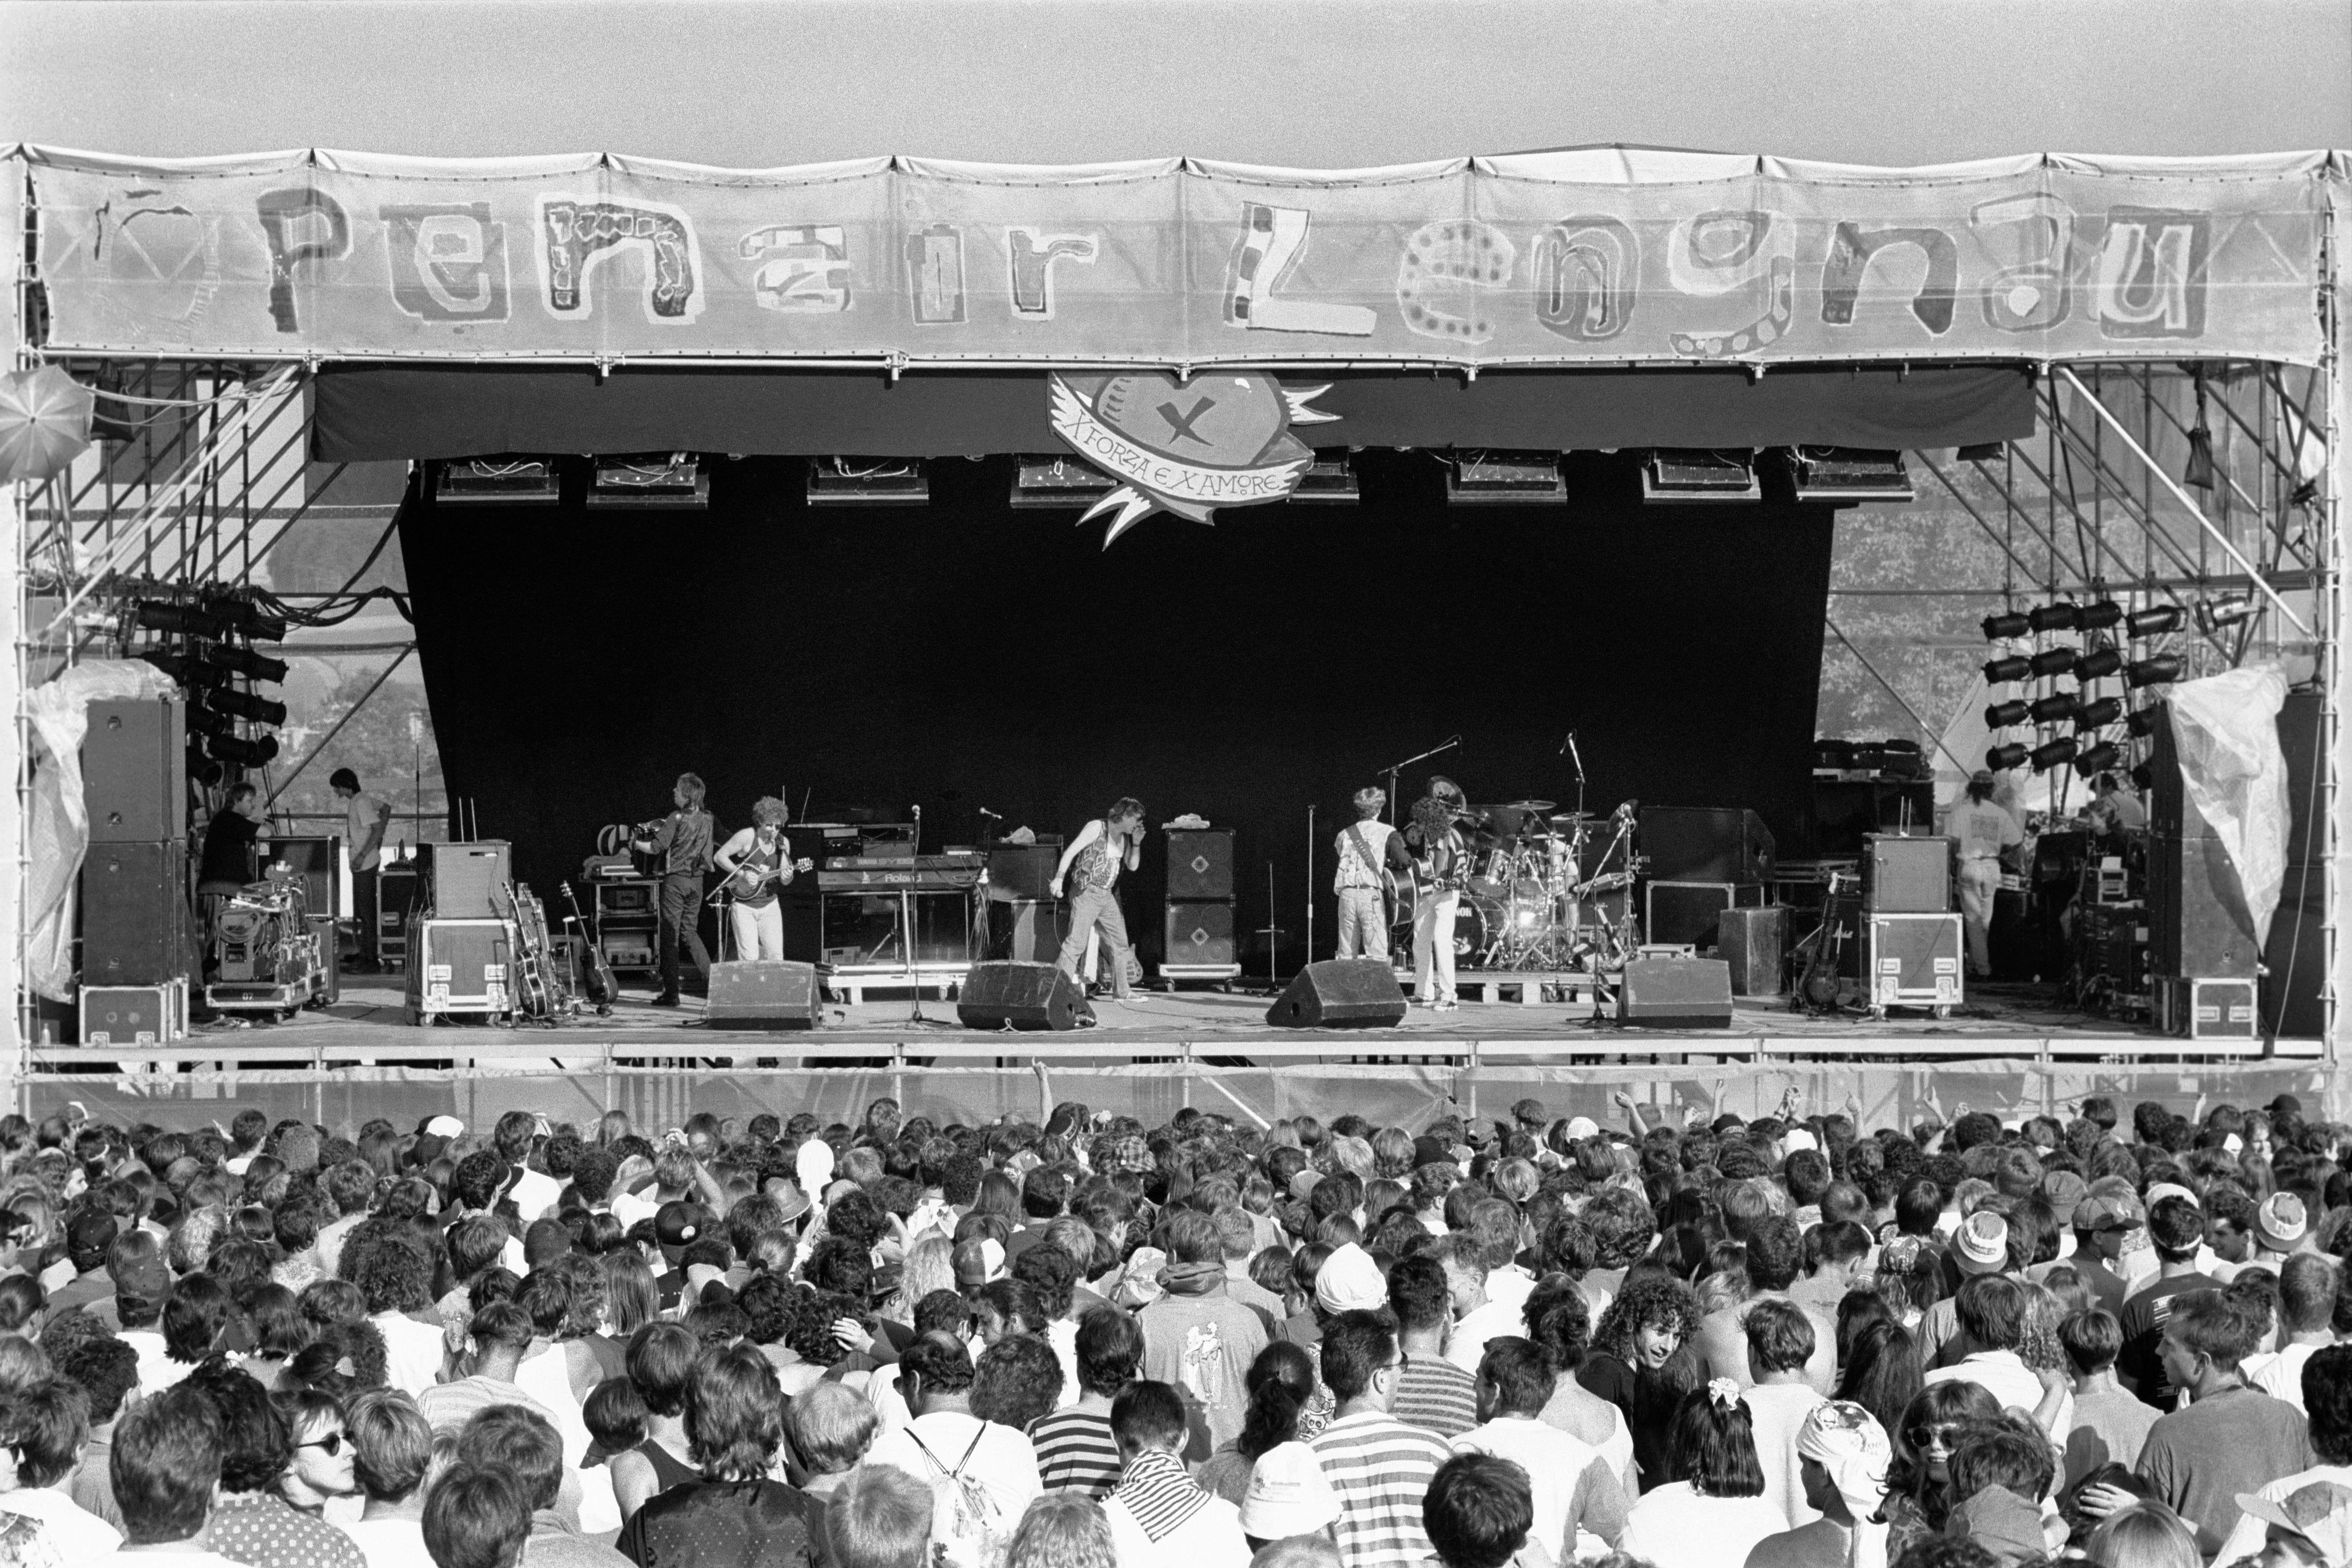 Polo Hofer, mit Mikrofon, spielt mit seiner Band am Open Air "Rock gegen Hass" am 20. Juni 1993 in Lengnau.